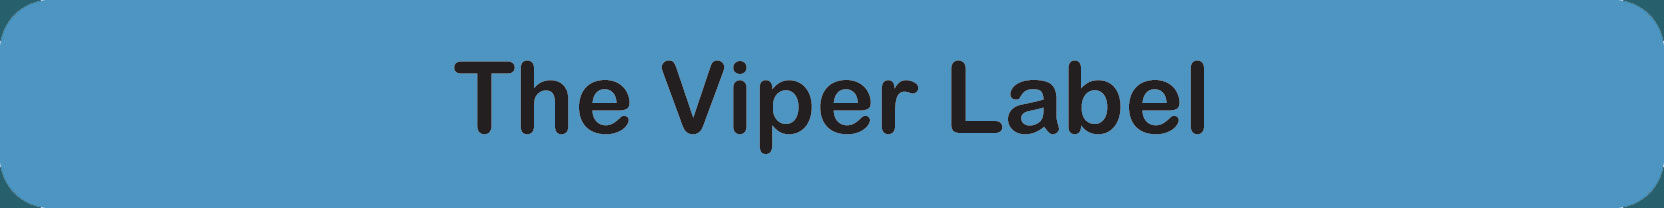 the viper label link